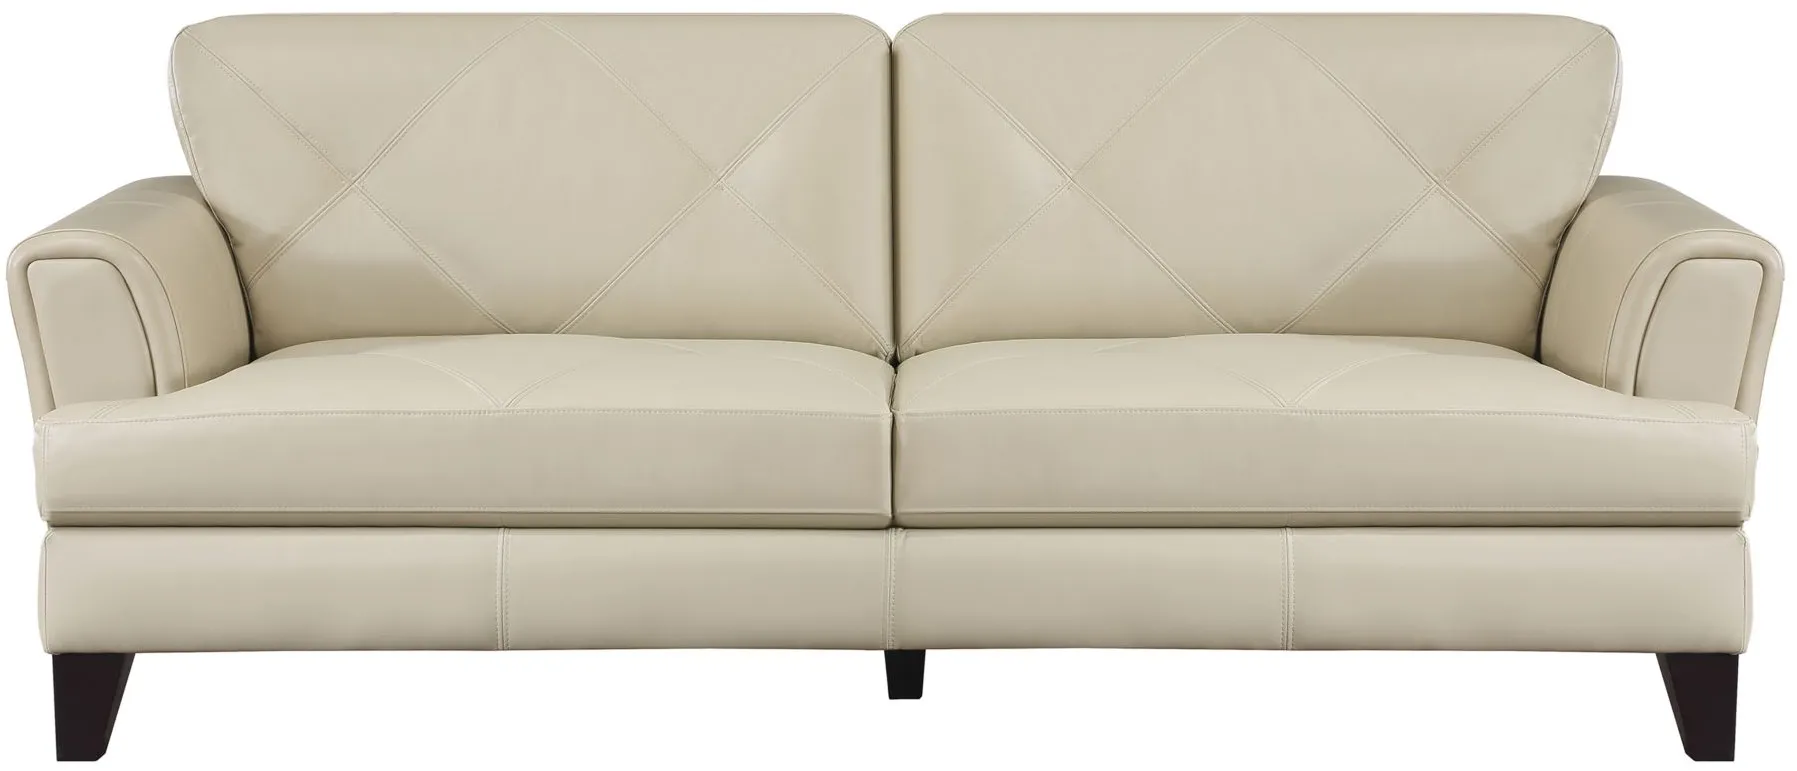 Halton Sofa in Cream by Homelegance